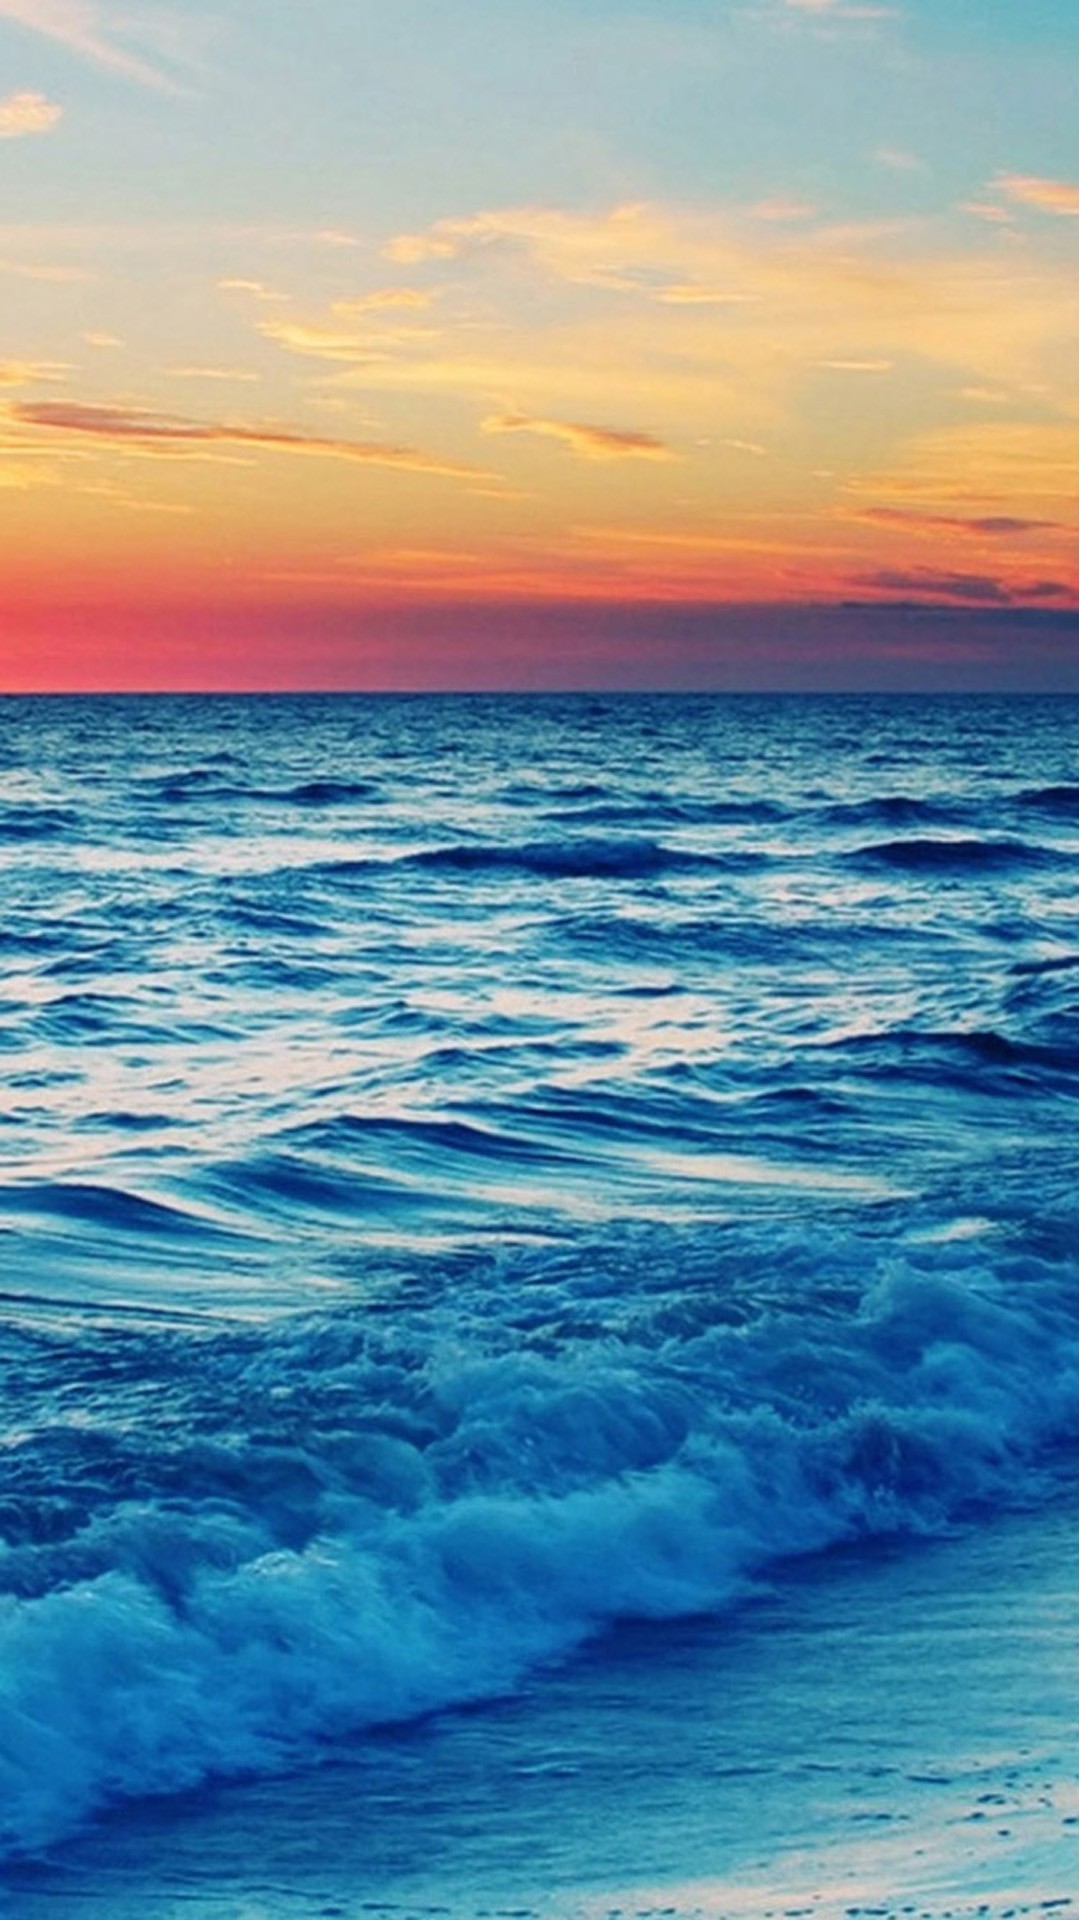 Заставка на айфон 7. Красивое море. Море вертикально. Море фото красивые. Красивое море вертикально.